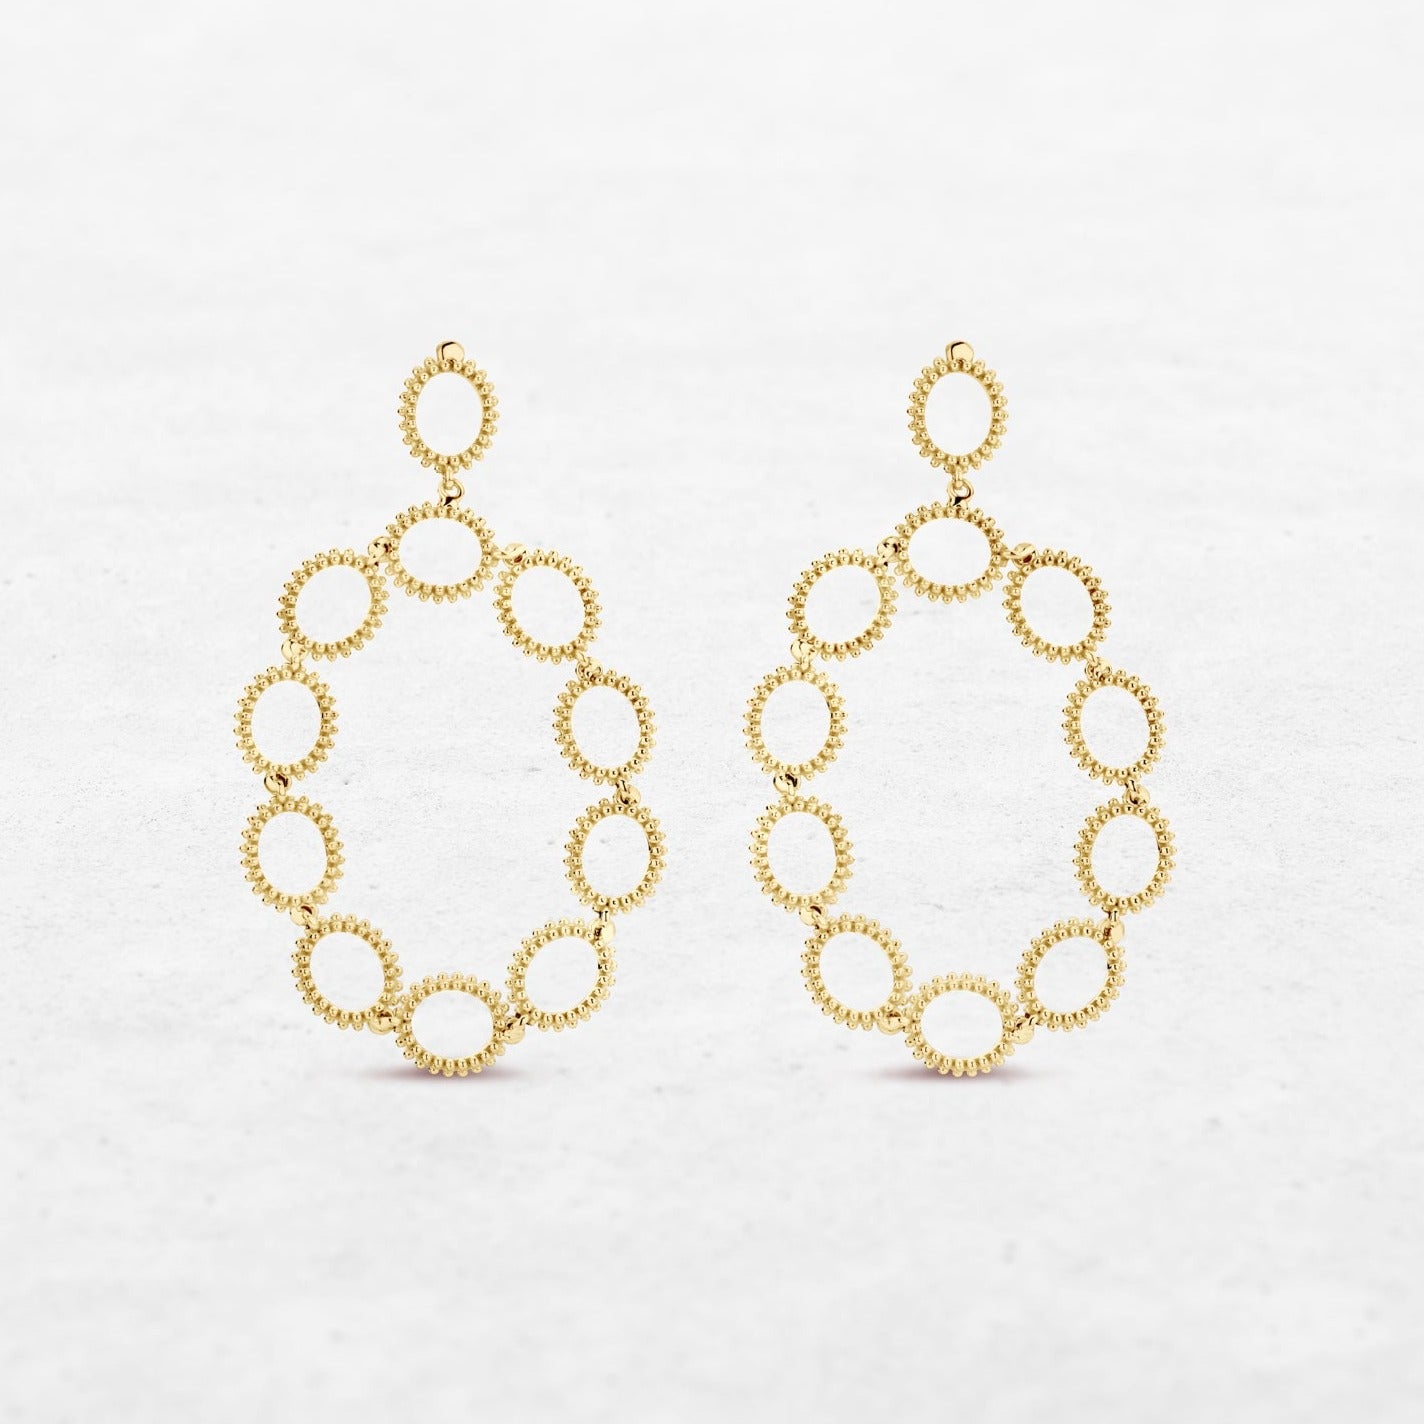 Circular earrings in yellow gold made by O! Jewelry